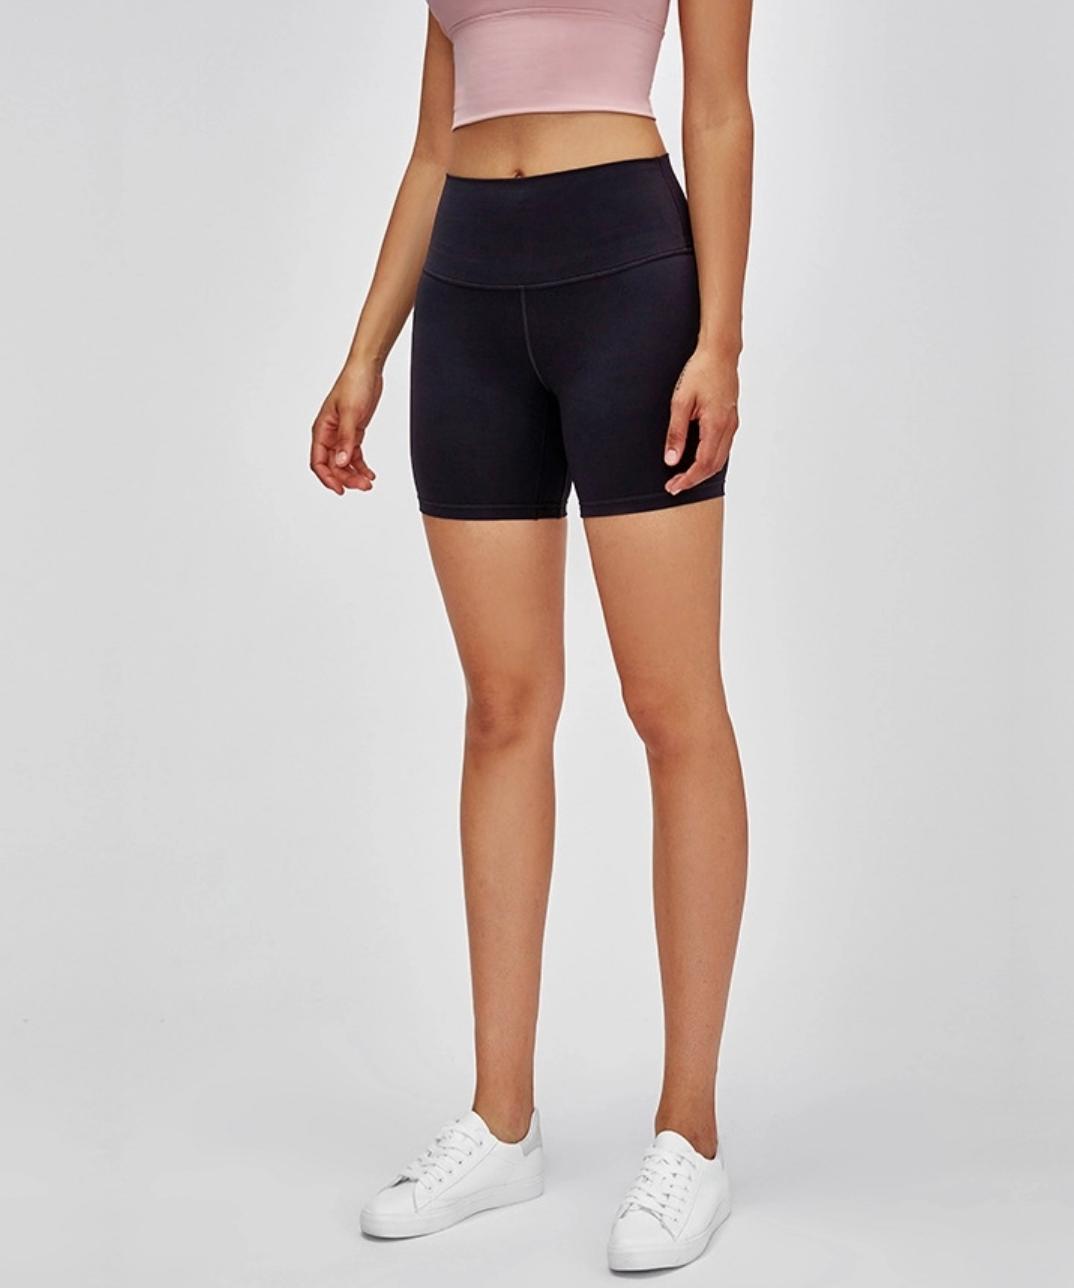 Easy Sprint 6” Shorts in Black